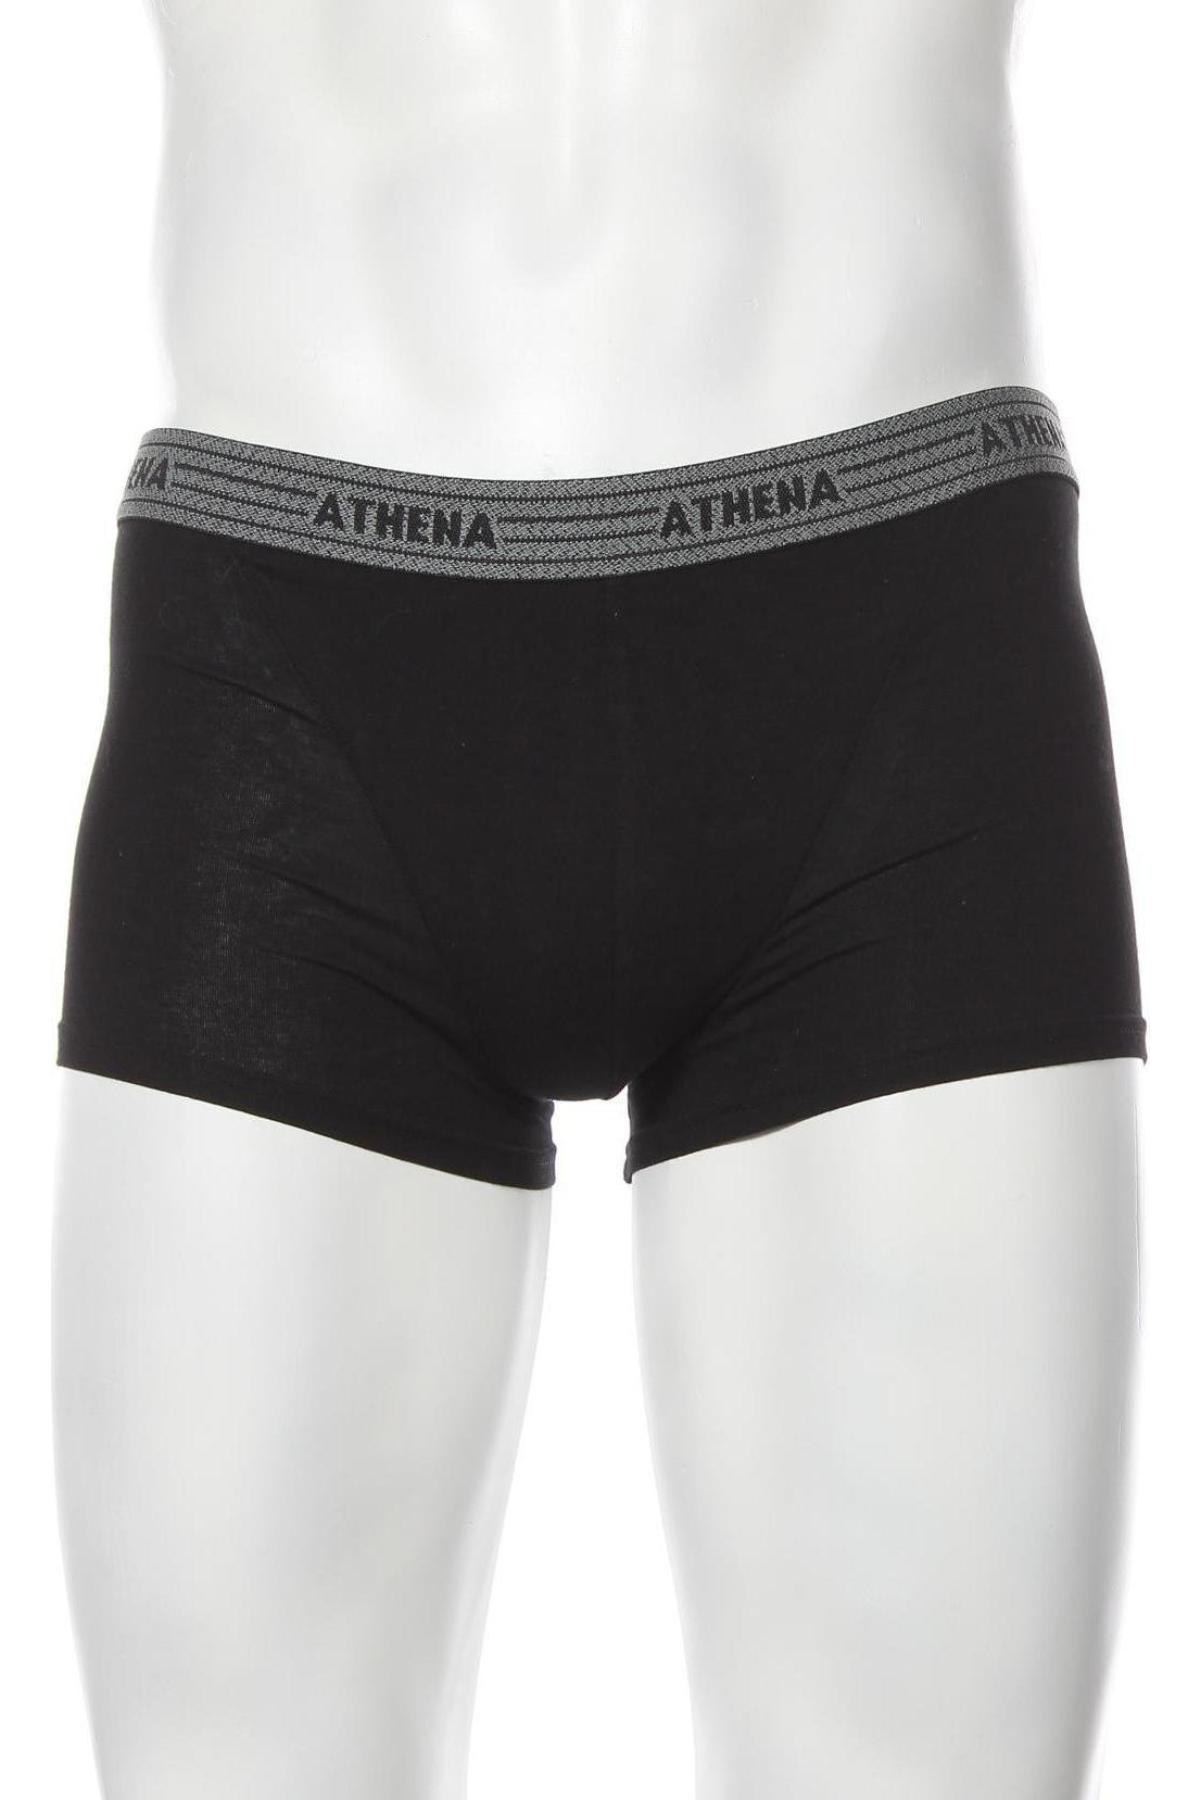 Pánský komplet  Athena, Velikost M, Barva Černá, 95% bavlna, 5% elastan, Cena  891,00 Kč